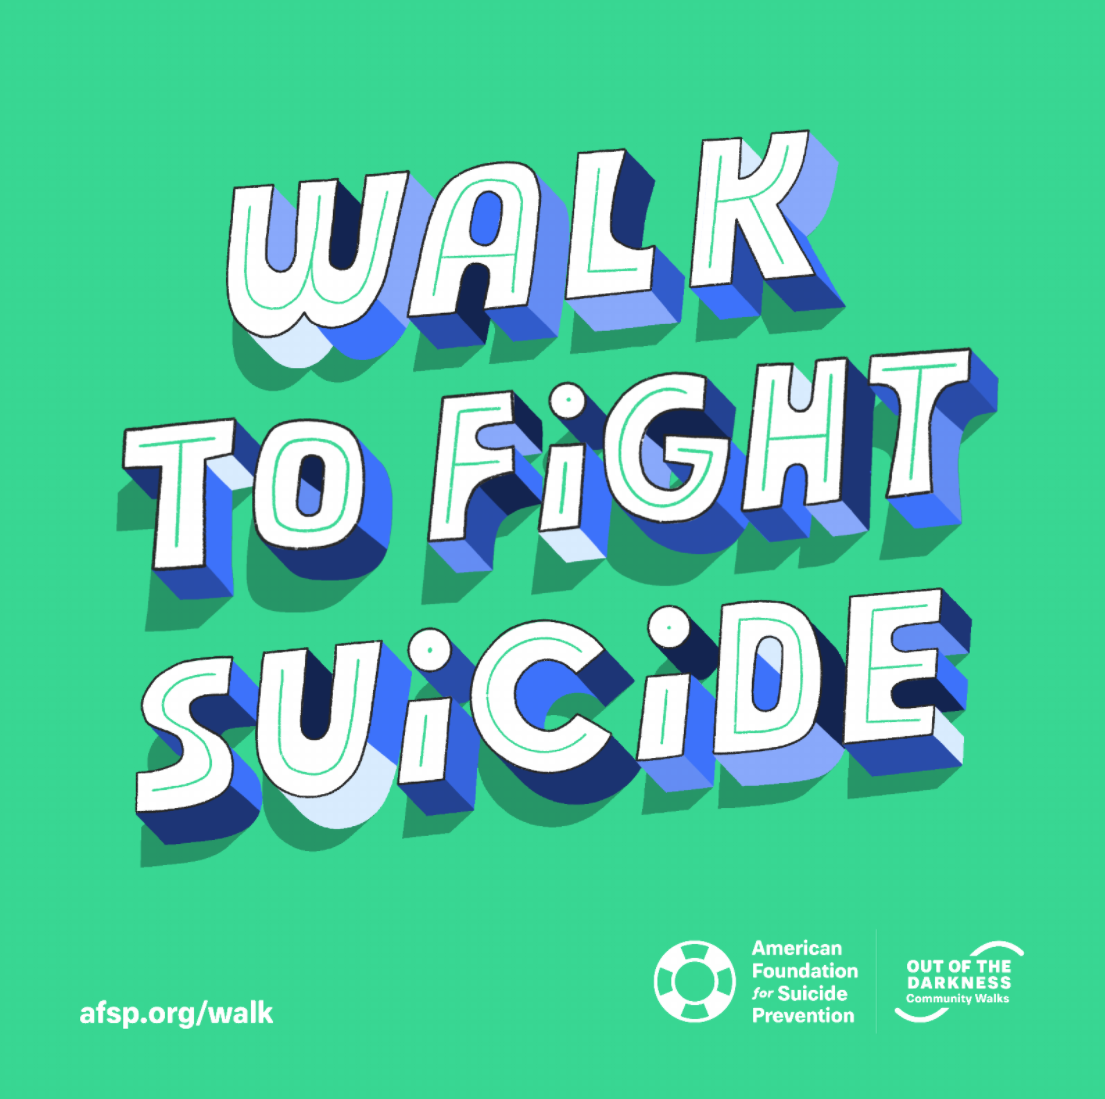 Local Volunteers Walk to Fight Suicide